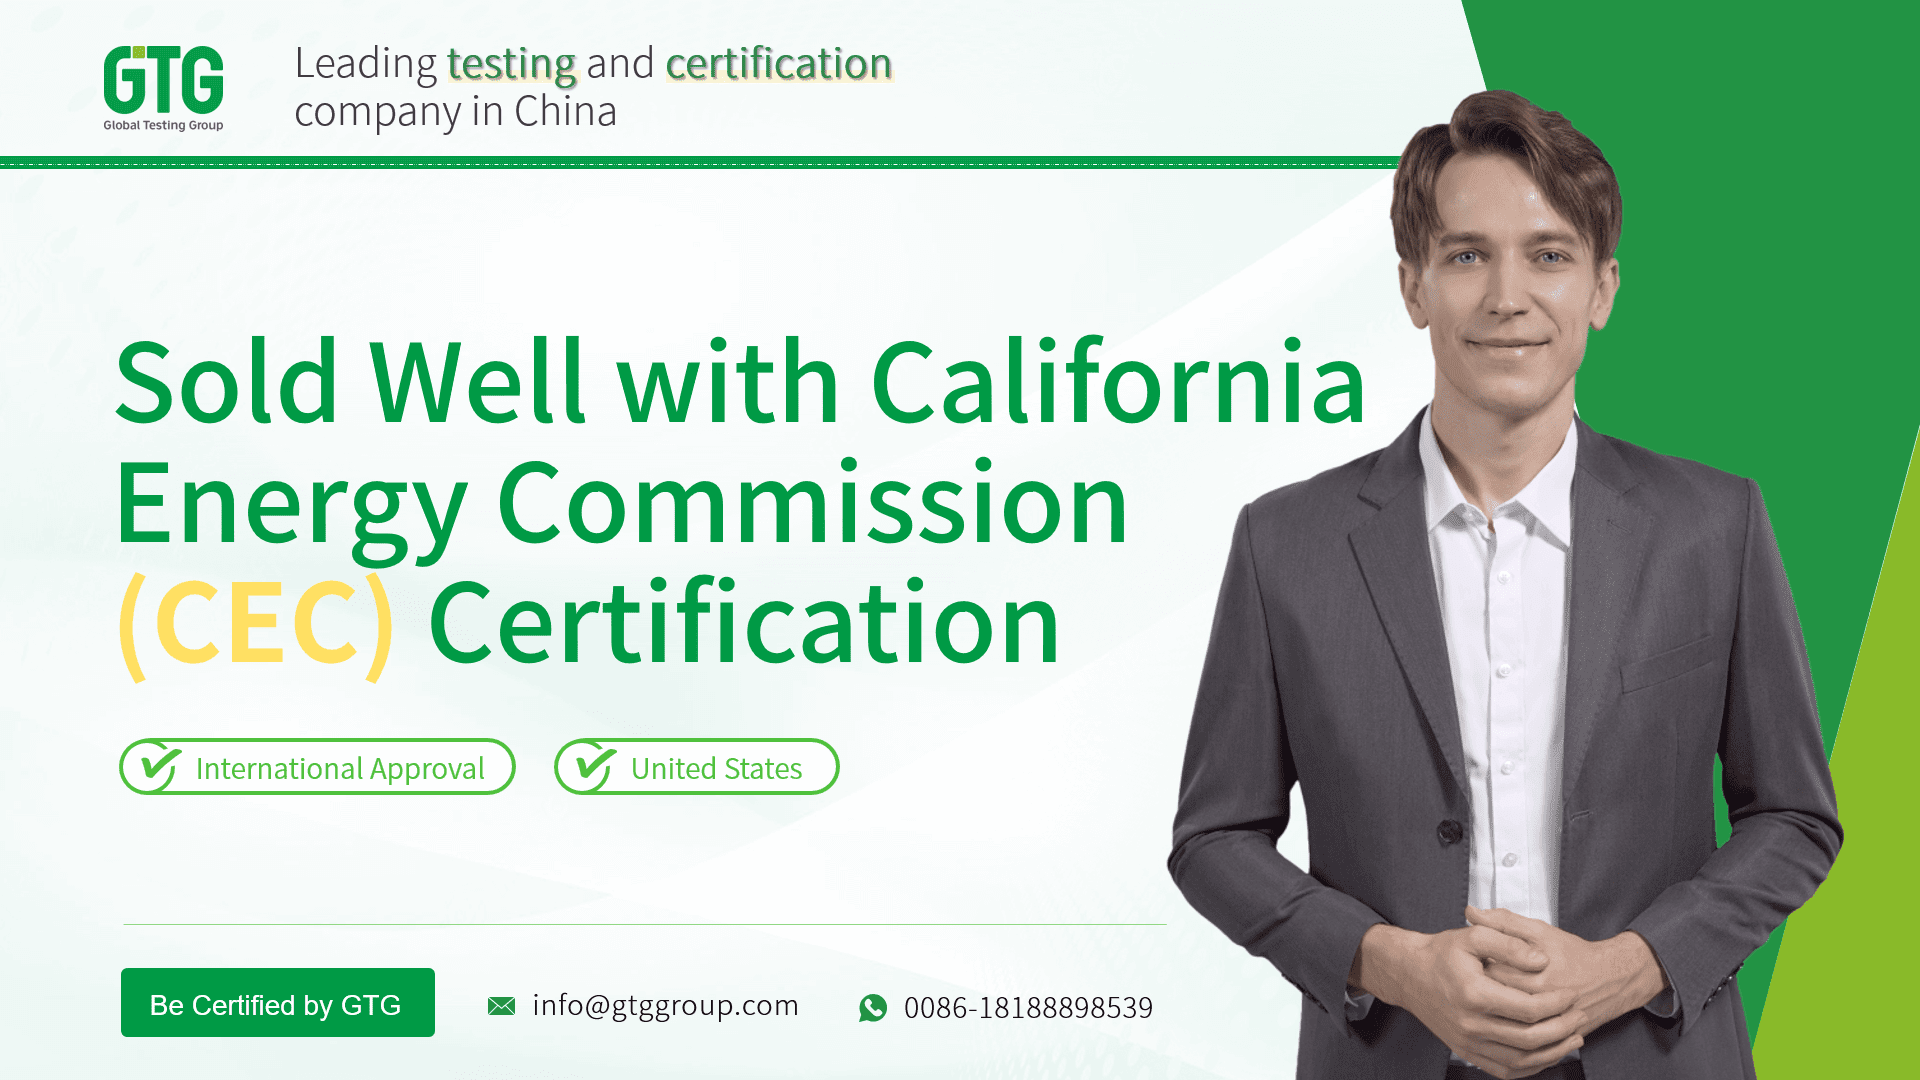 GTG Provides California Energy Commission (CEC) Certification Recognition Service